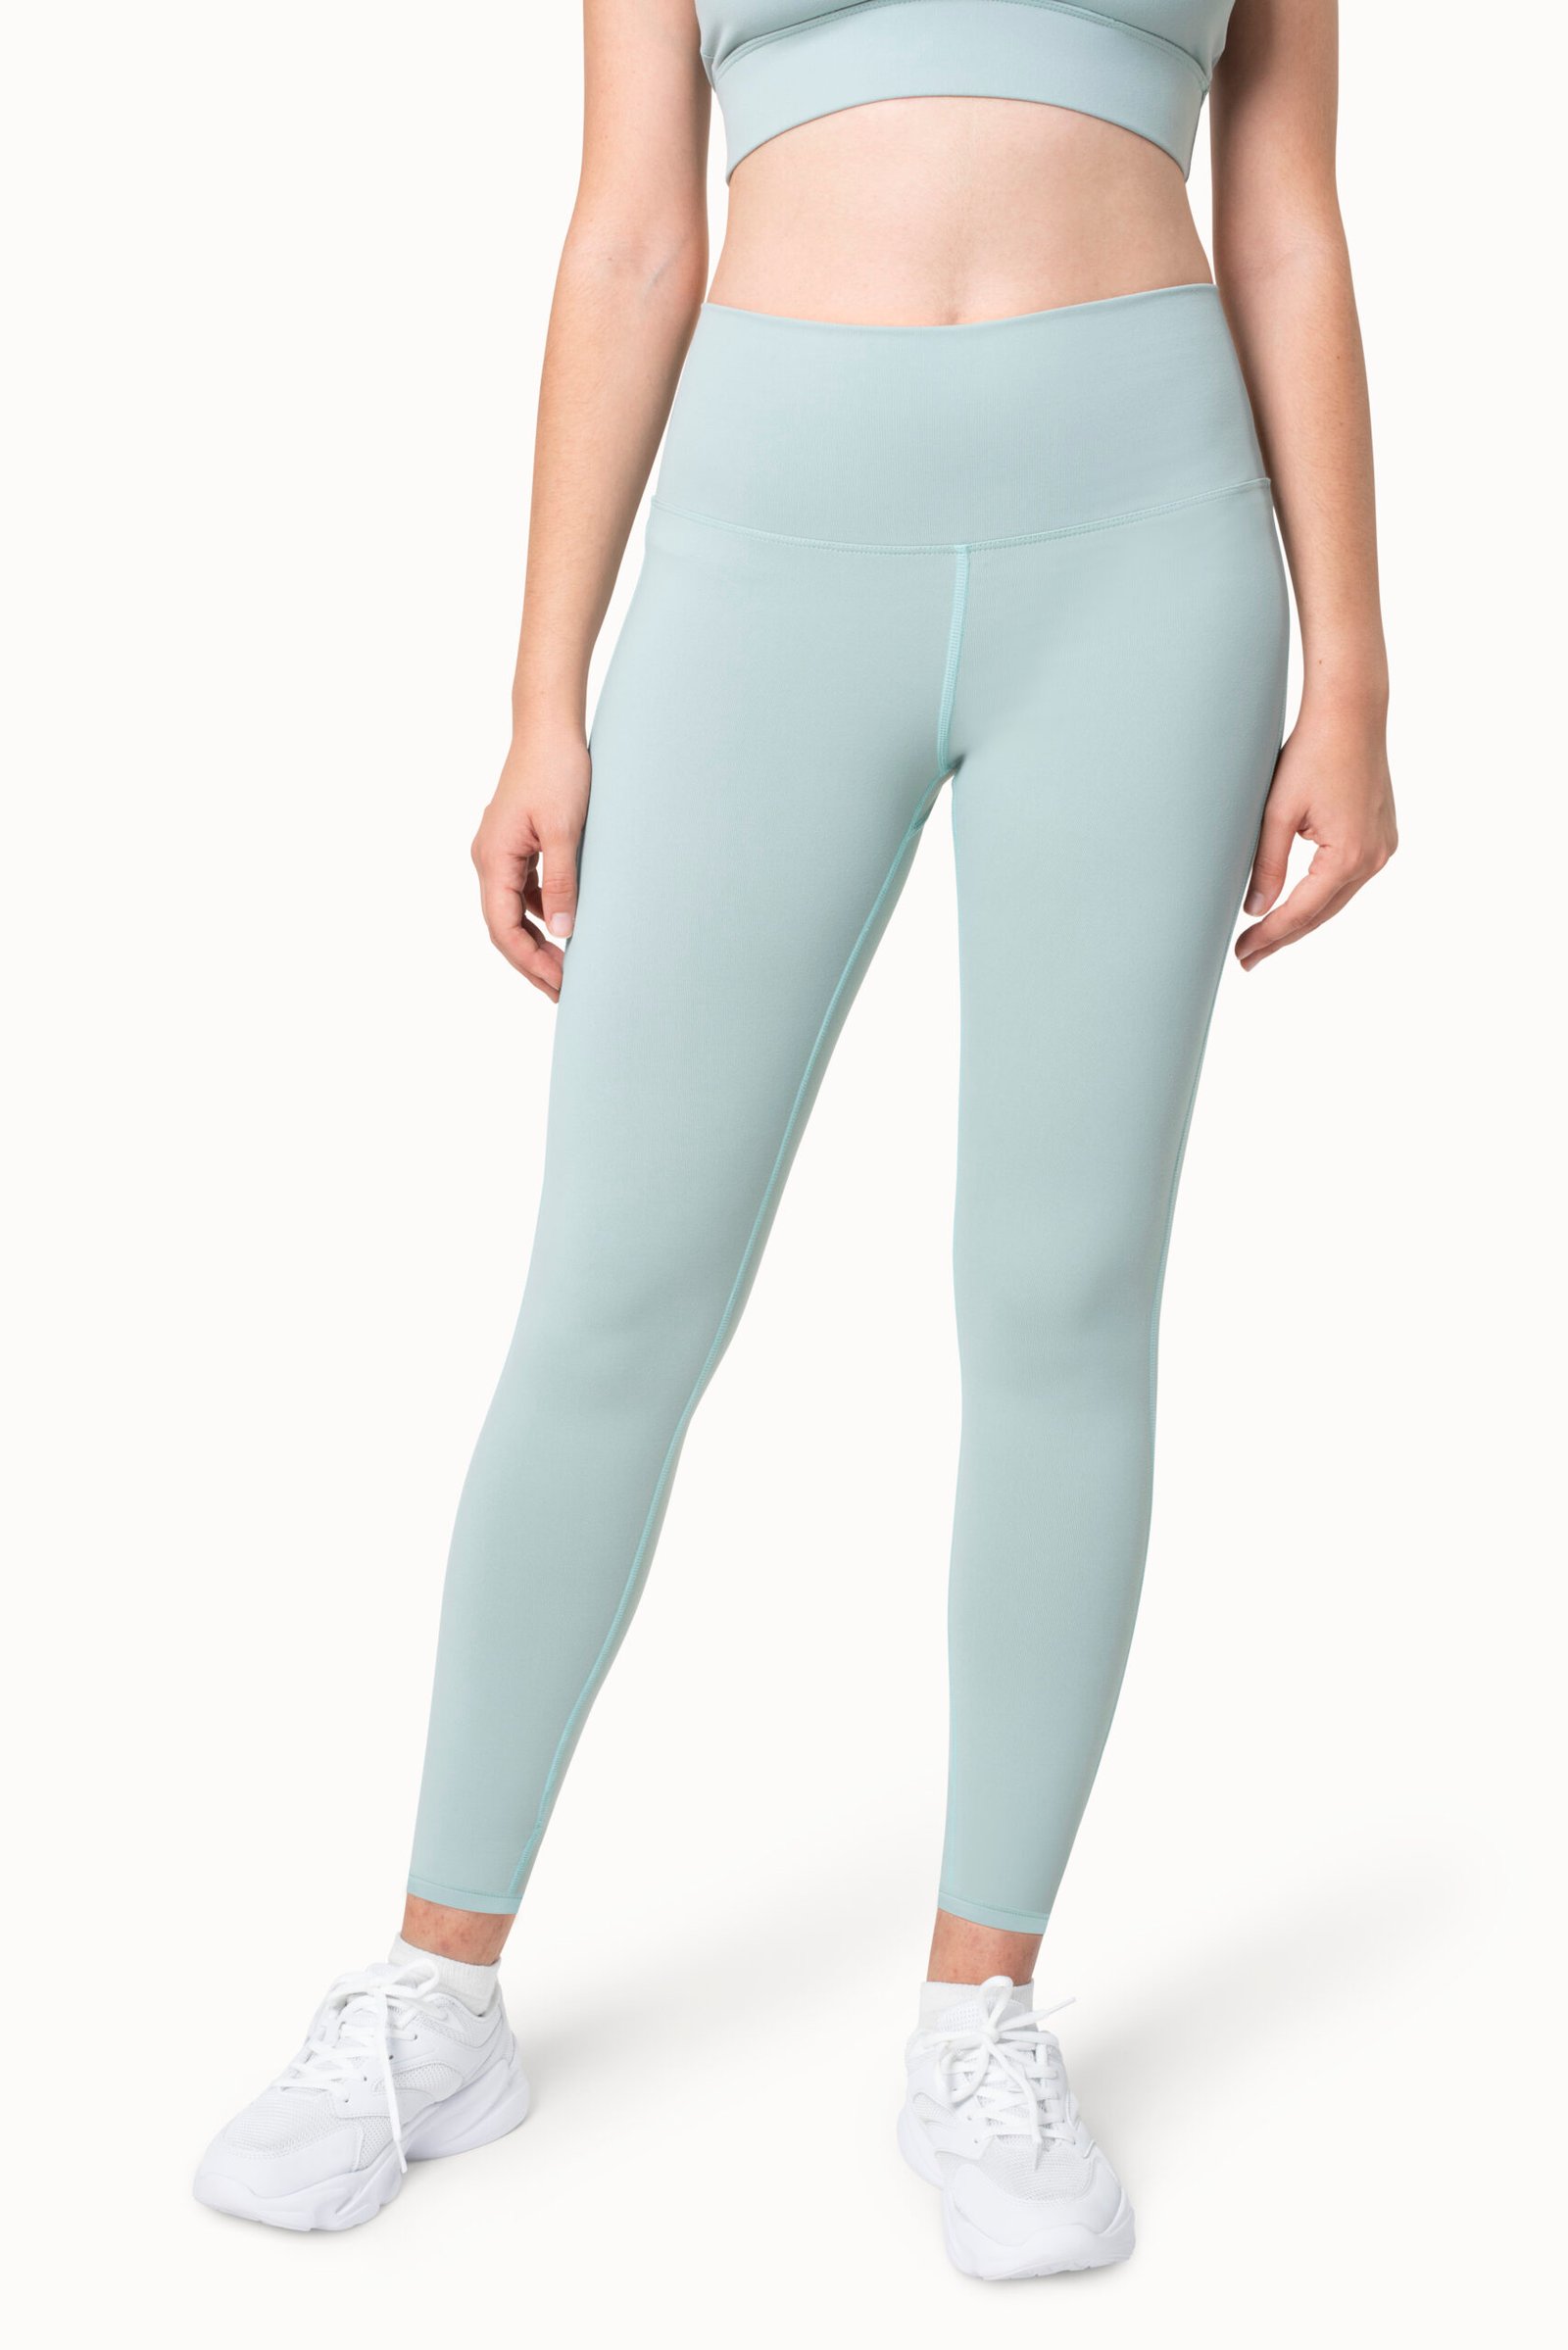 Plain blue yoga pants sportswear apparel studio shoot